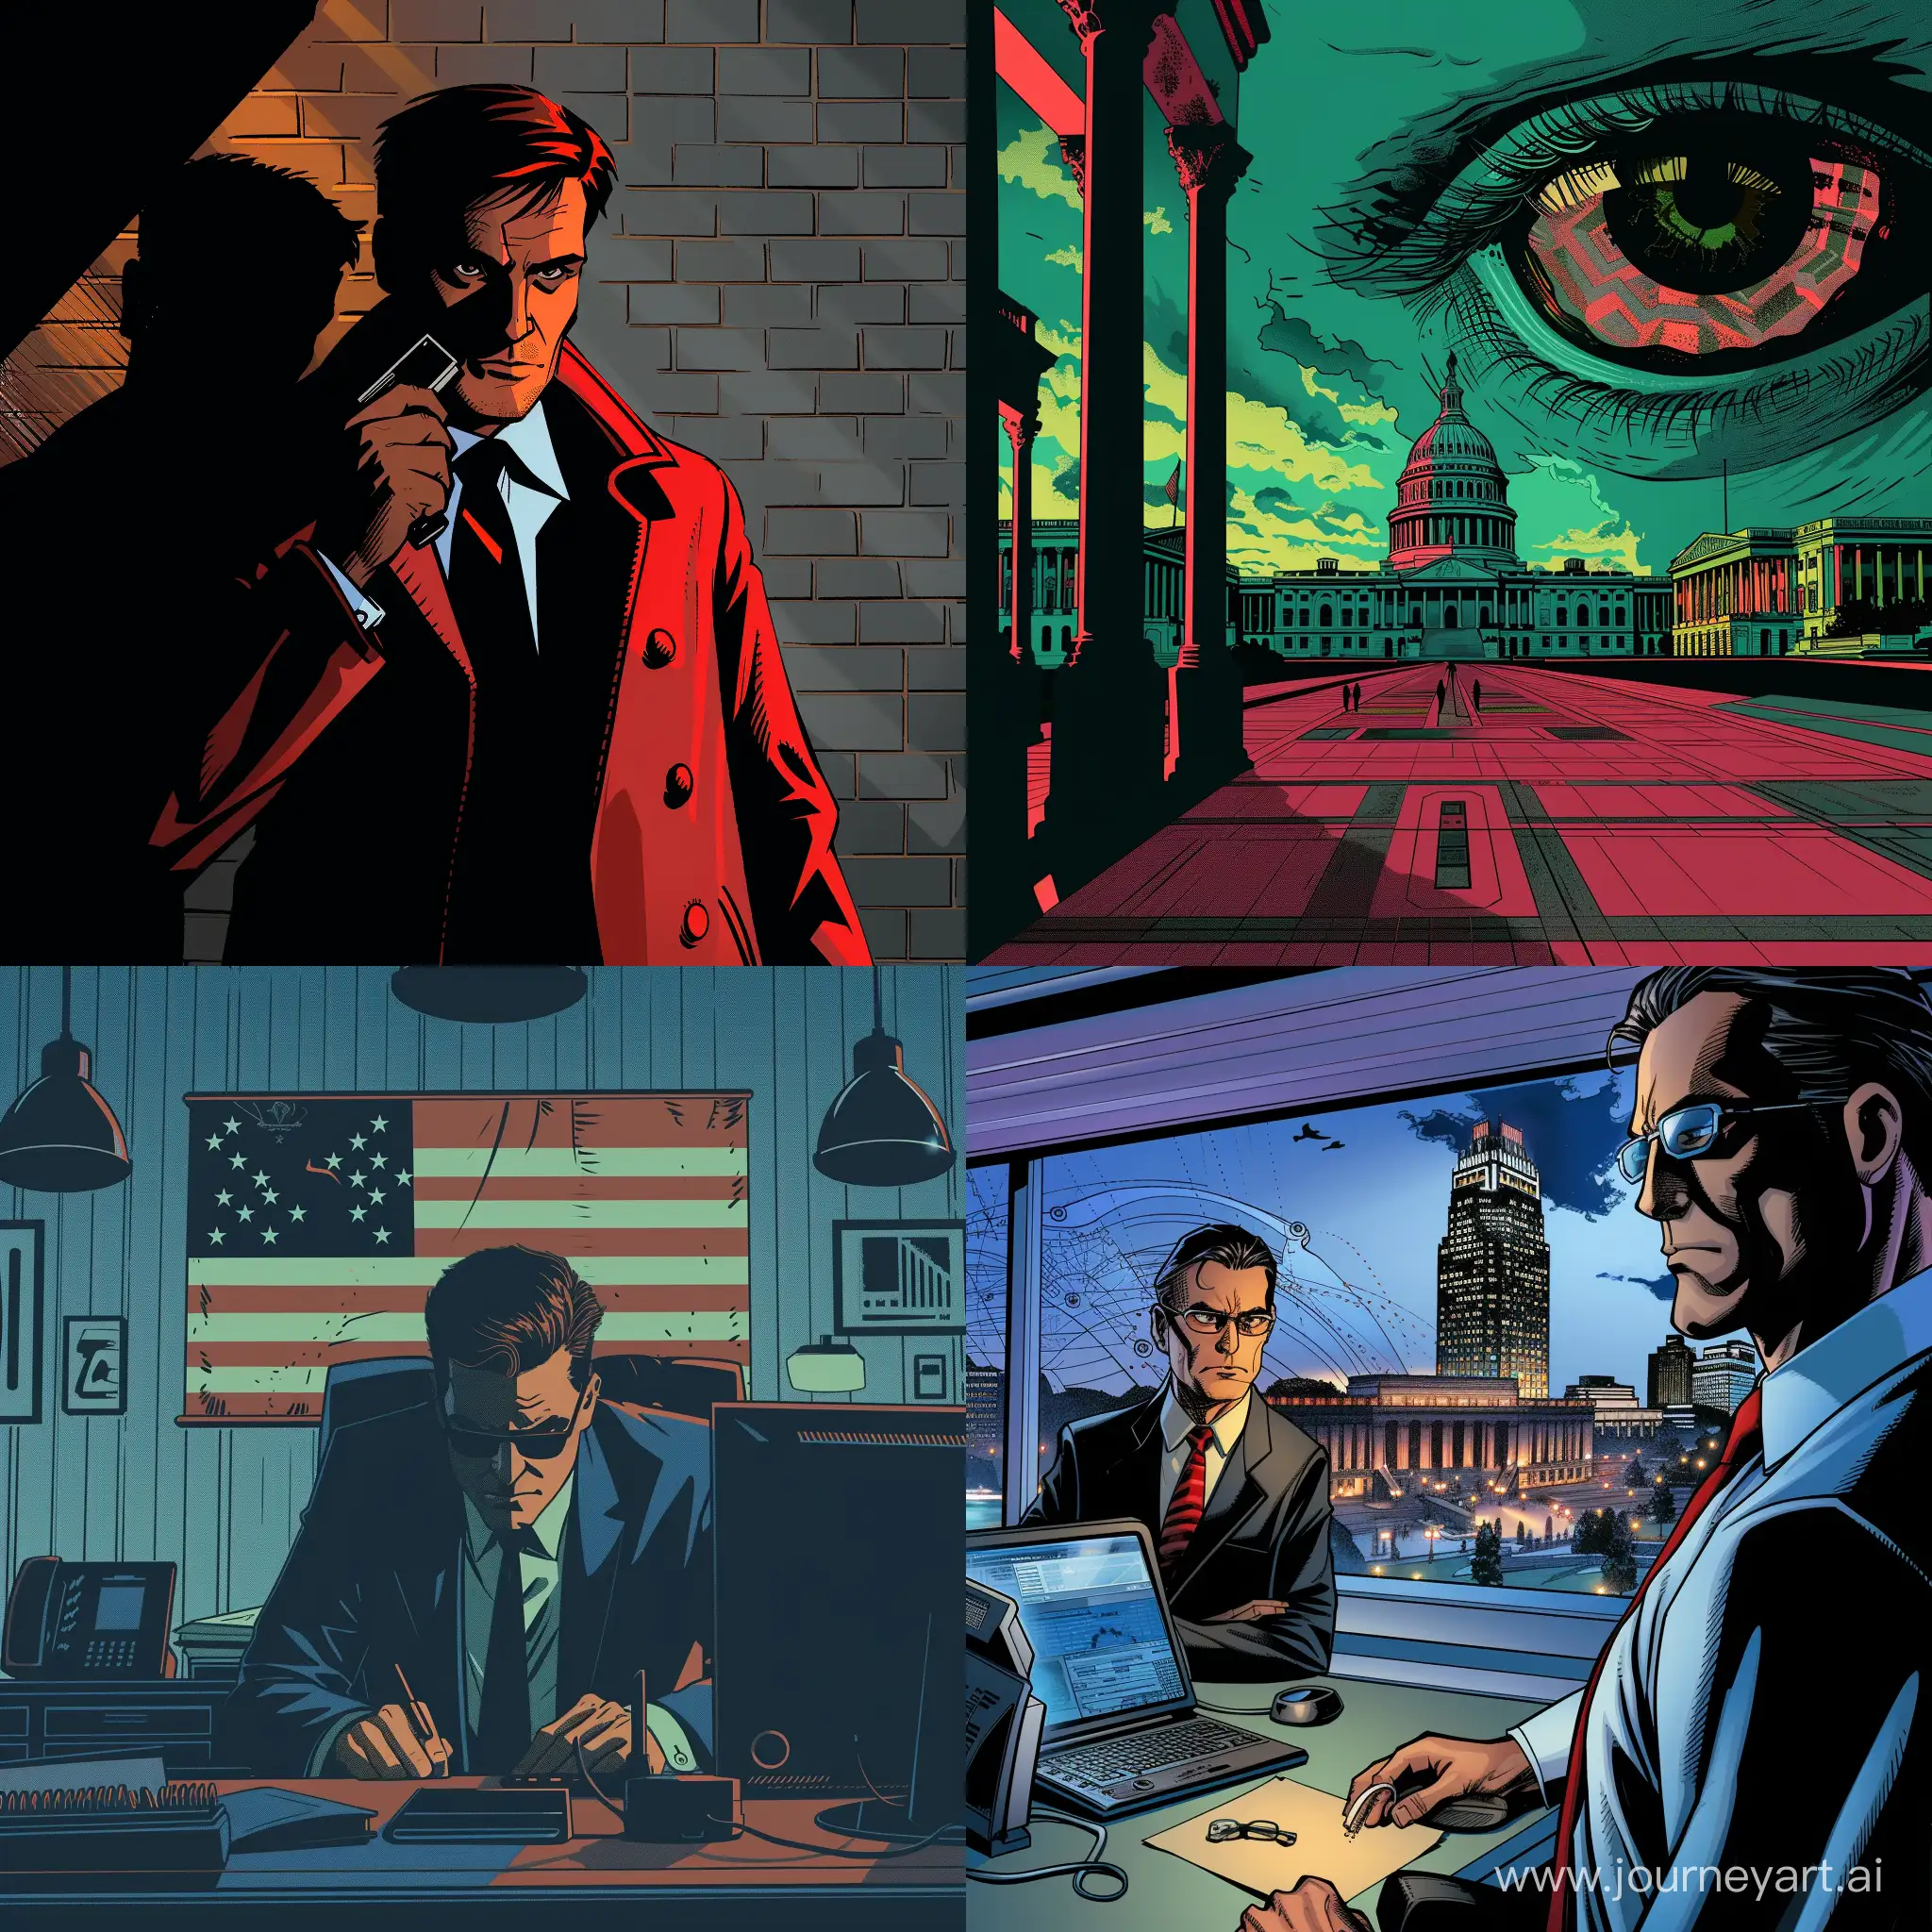 Modern-American-Comic-Book-Government-Surveillance-in-Dim-Light